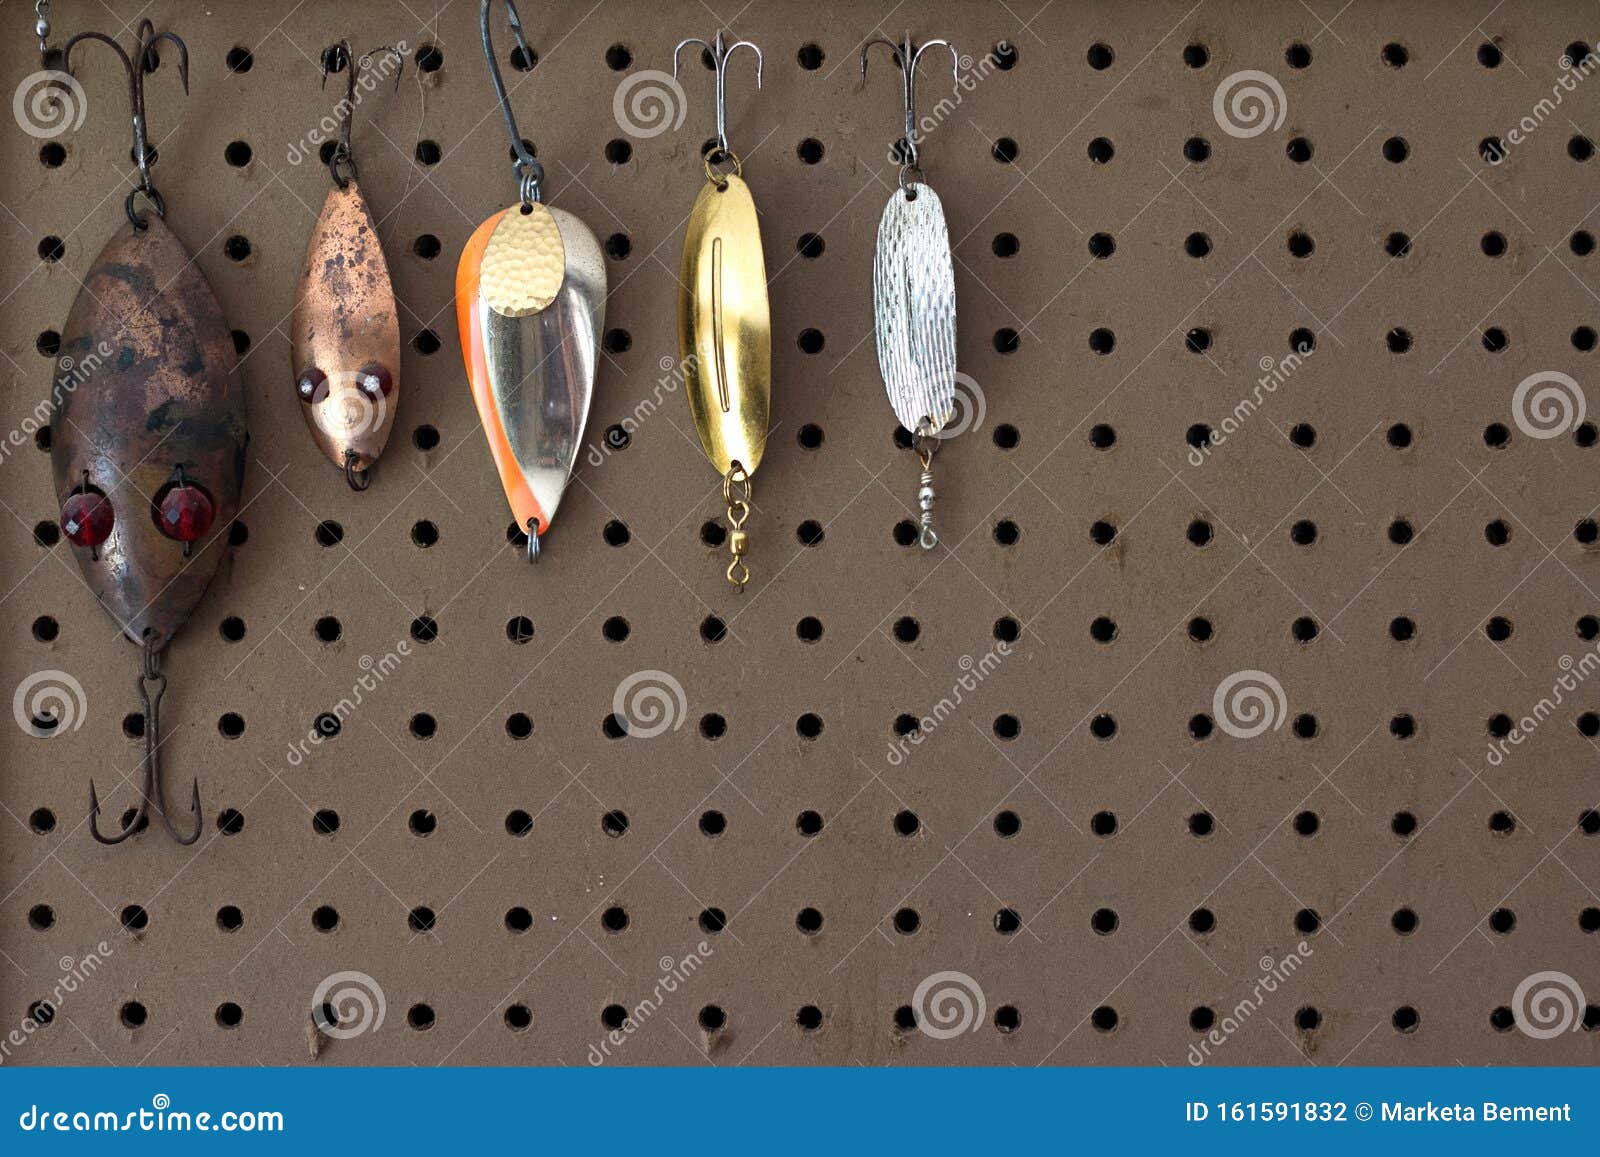 Old Shiny Vintage Fishing Lures Display Stock Photo - Image of close,  closeup: 161591832